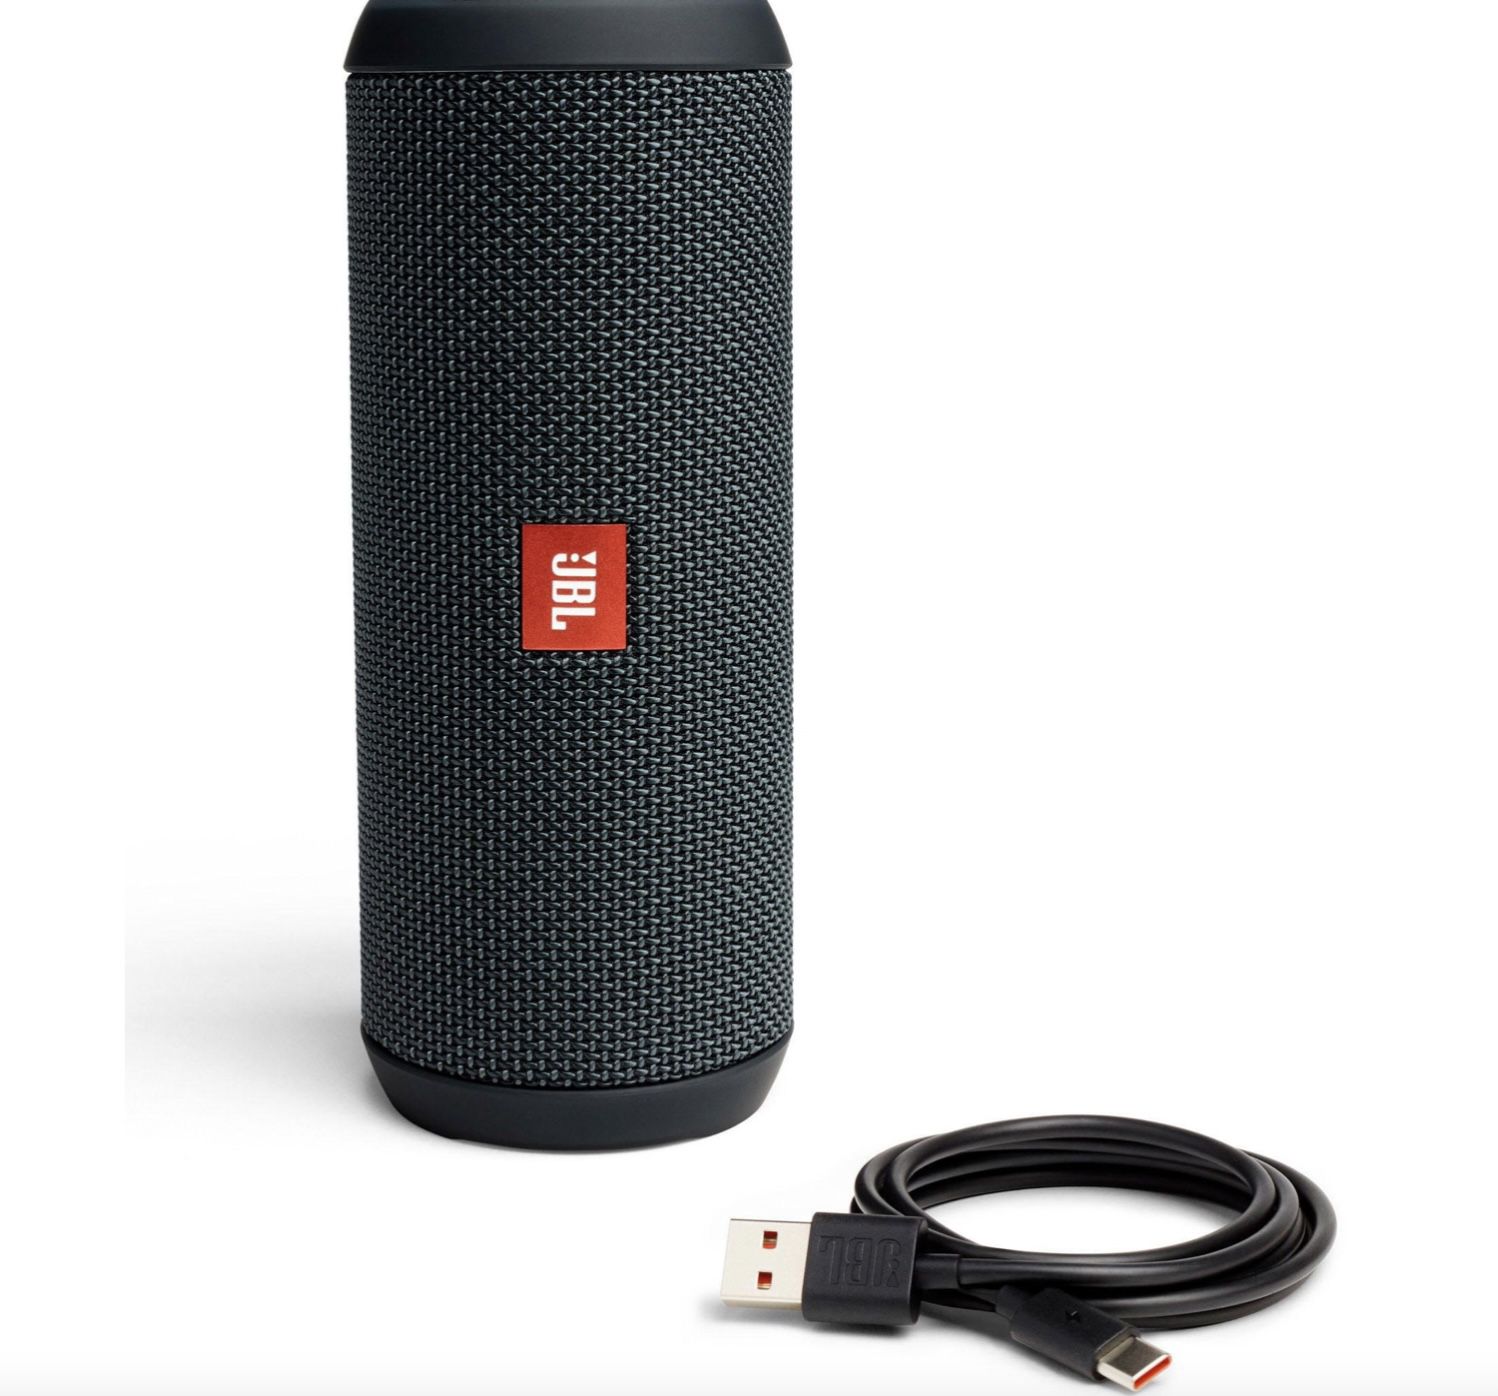 JBL Flip Essential wasserfester Bluetooth Lautsprecher mit 2x 8 Watt für 54€ (statt 72€)